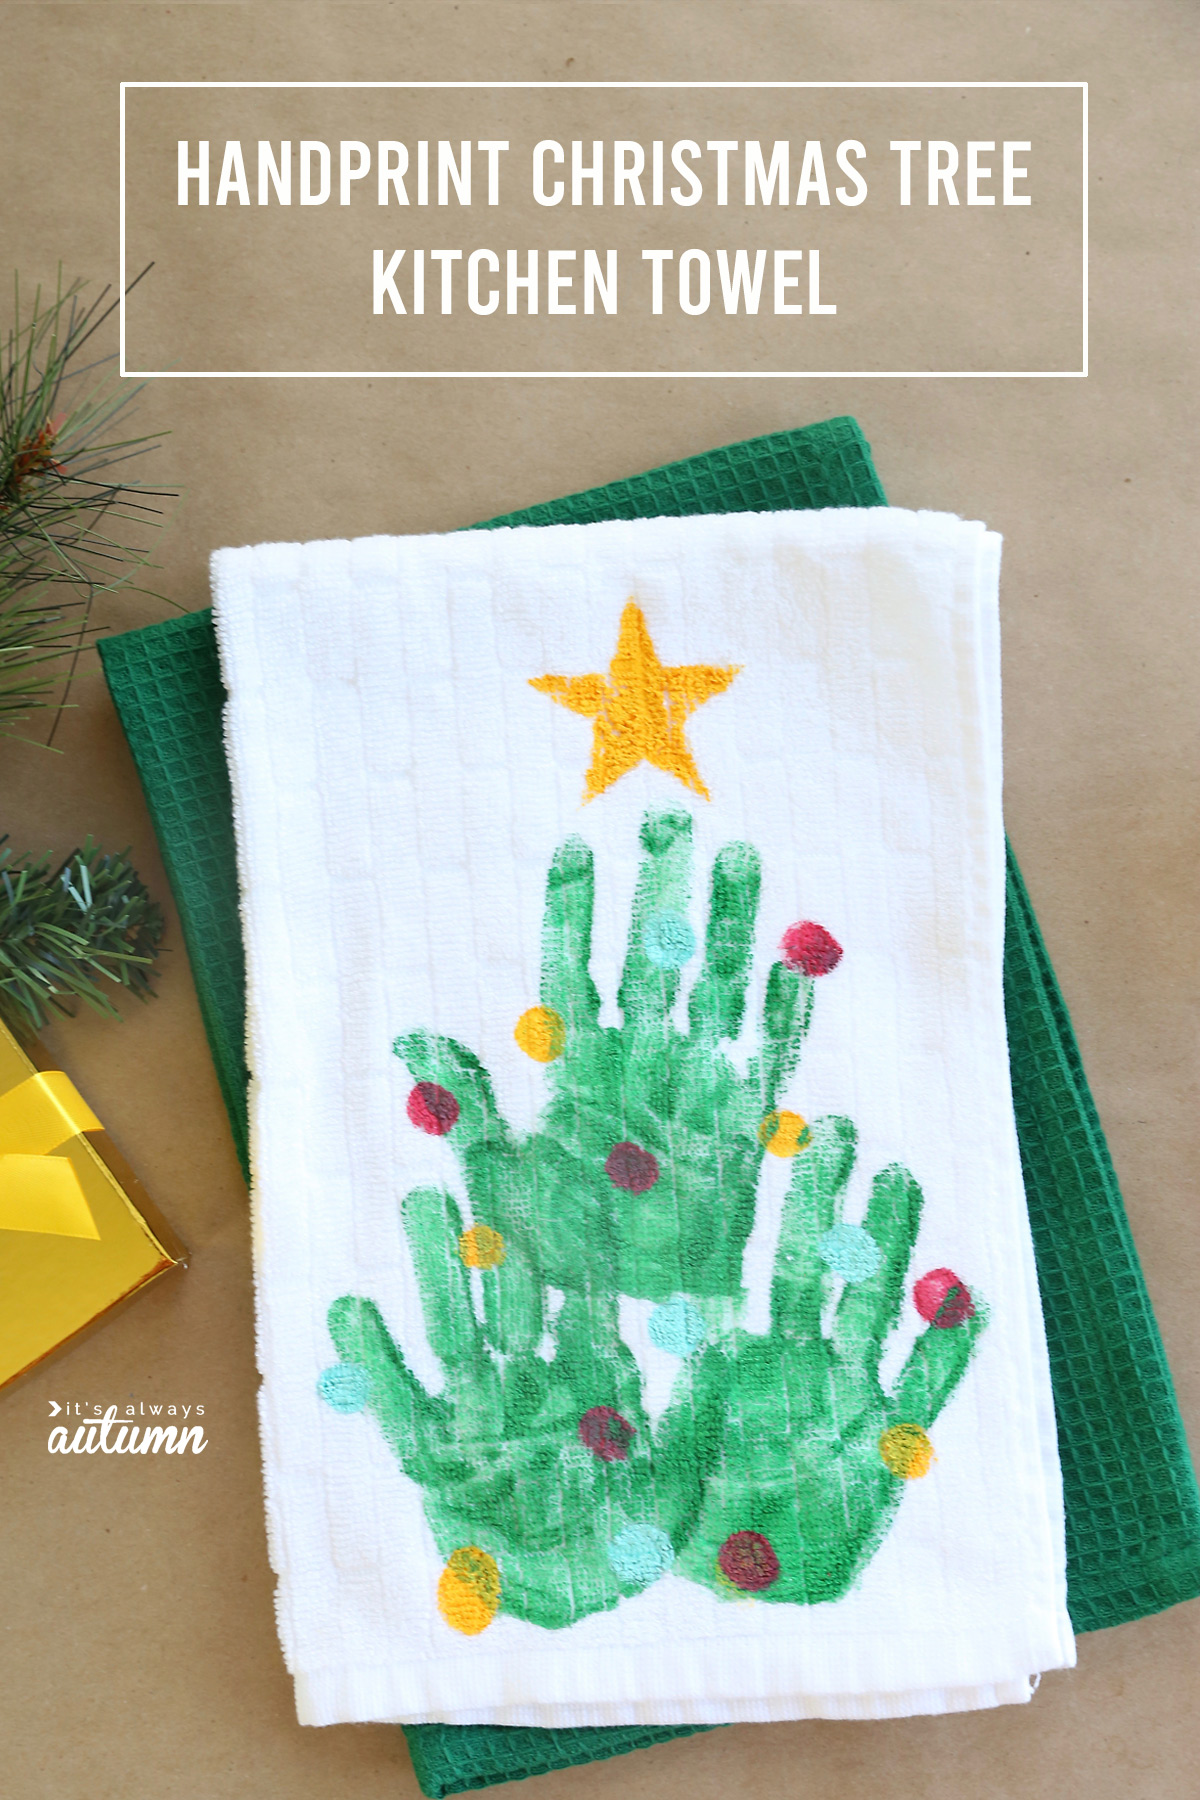 Cute idea! Make a handprint Christmas tree kitchen towel - fun homemade Christmas gift idea.